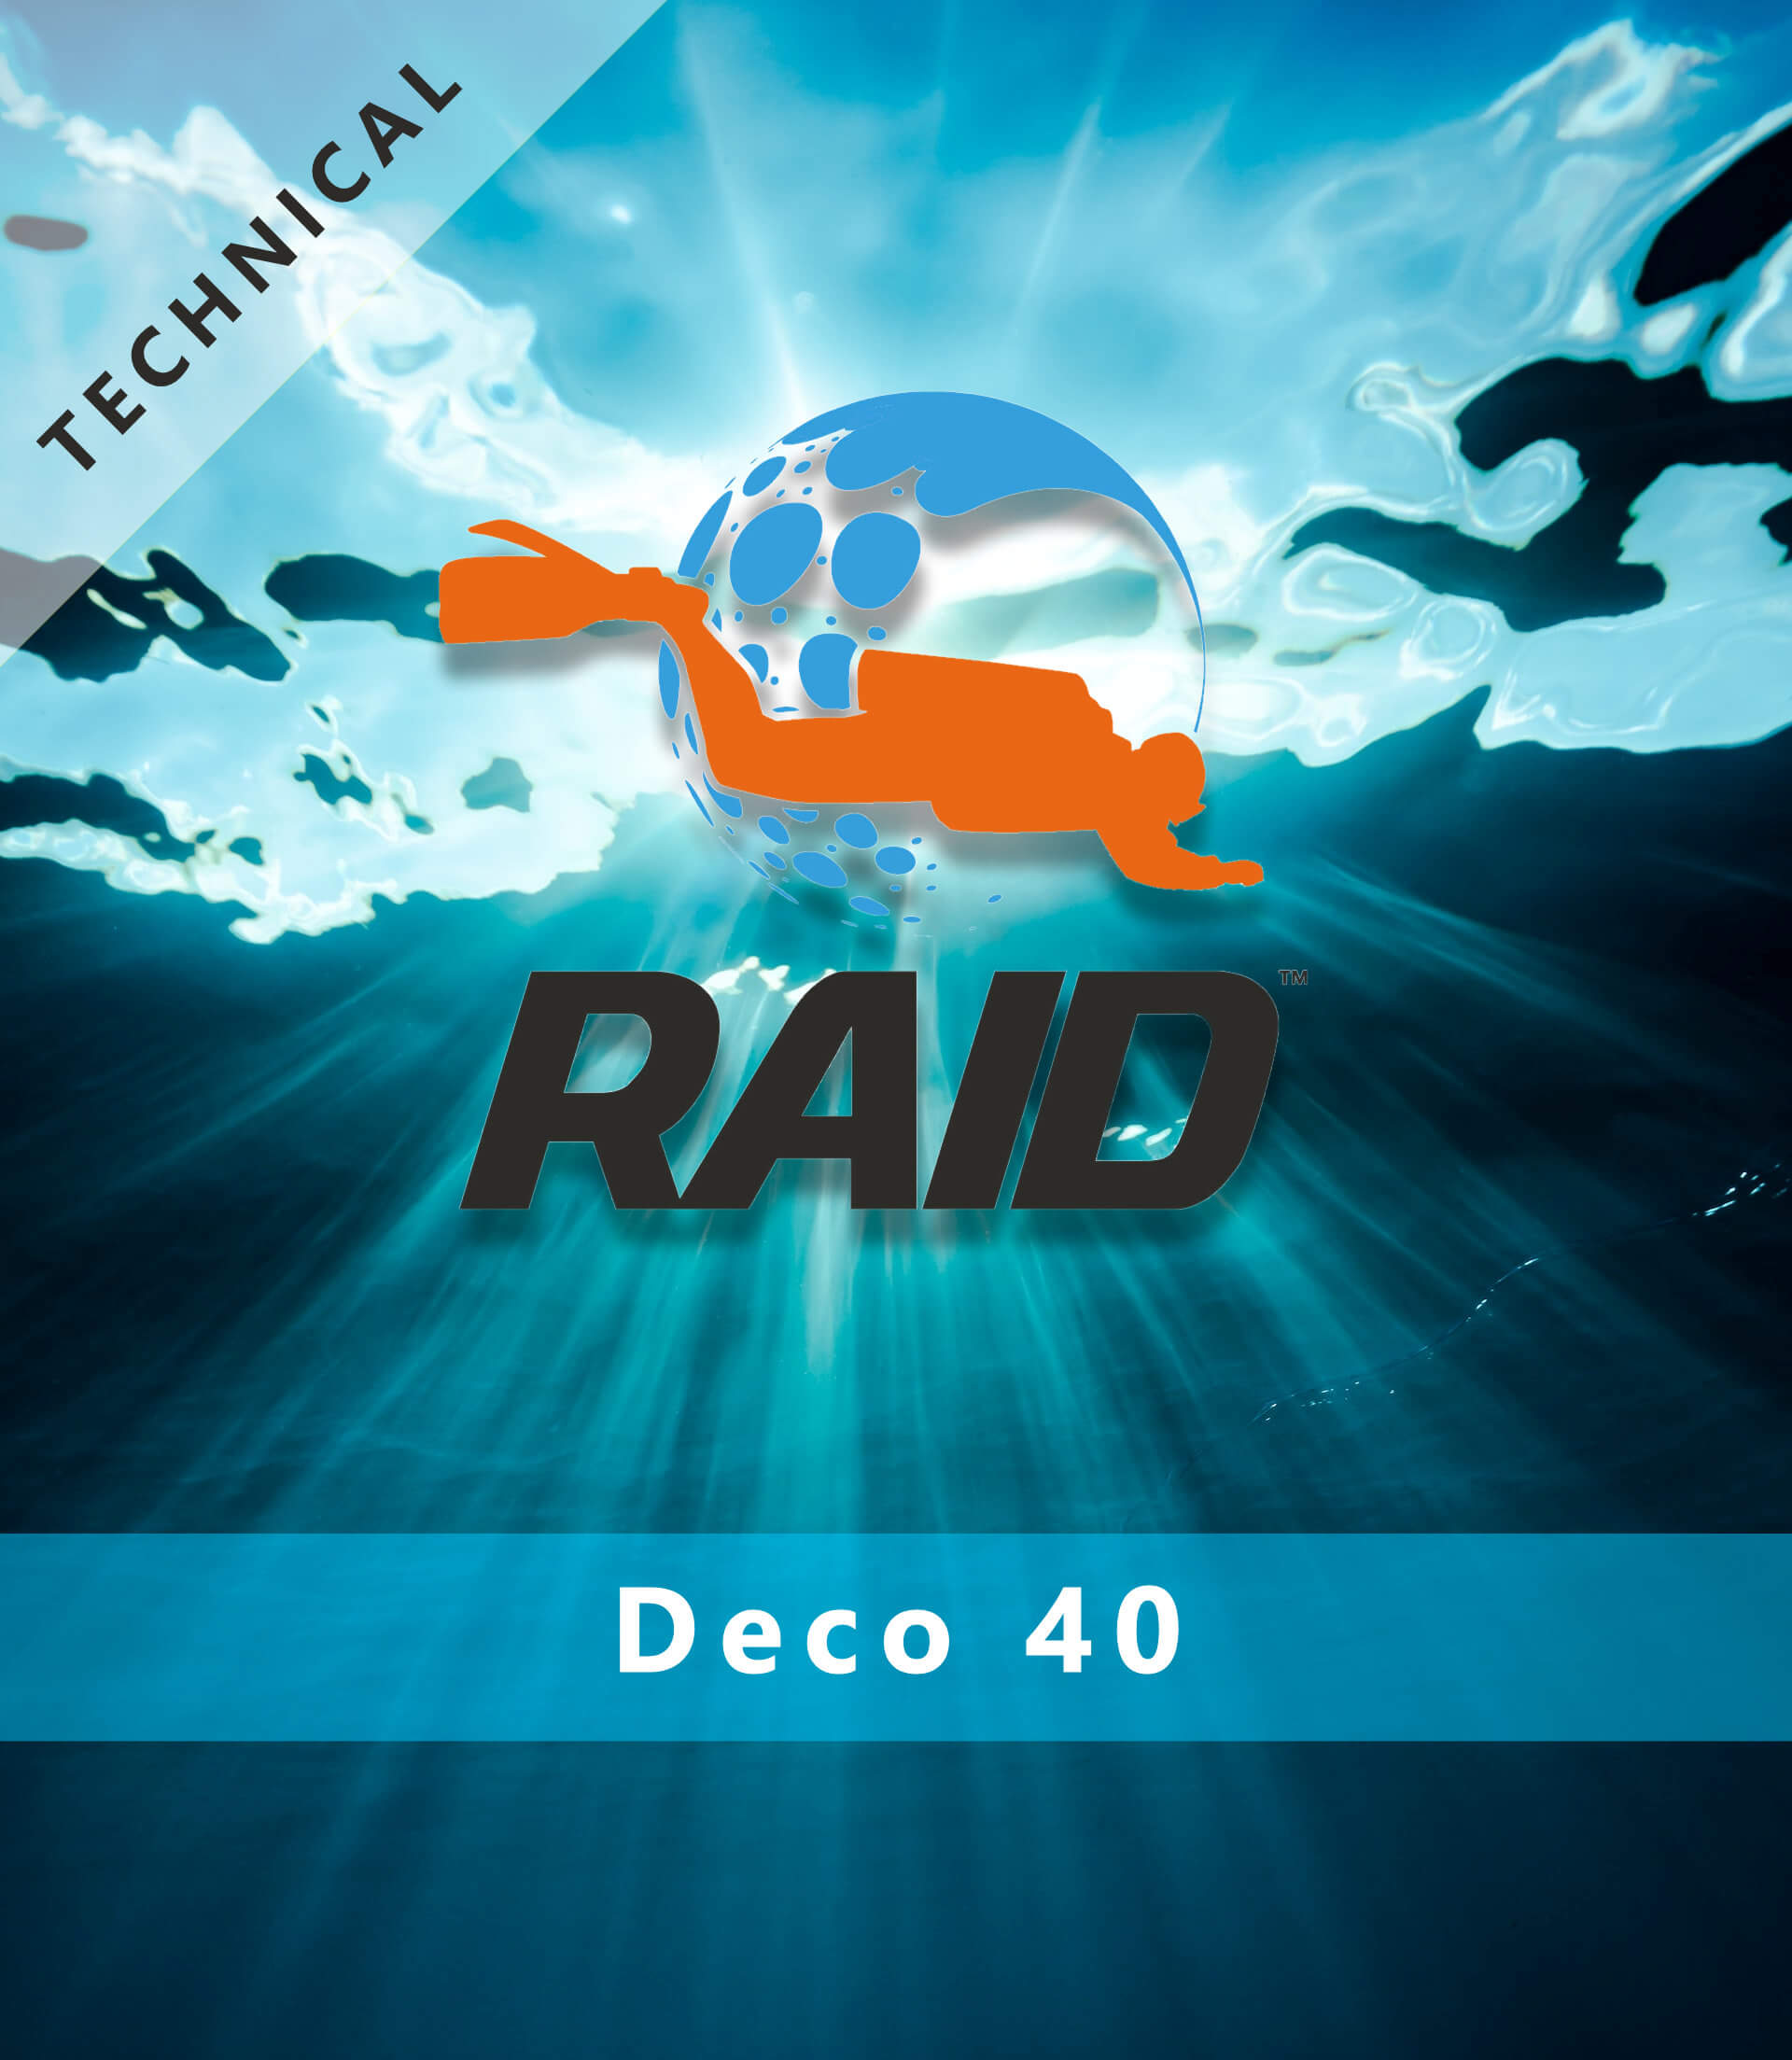 Technical / Deco 40 - RAID International Scuba Diving Course